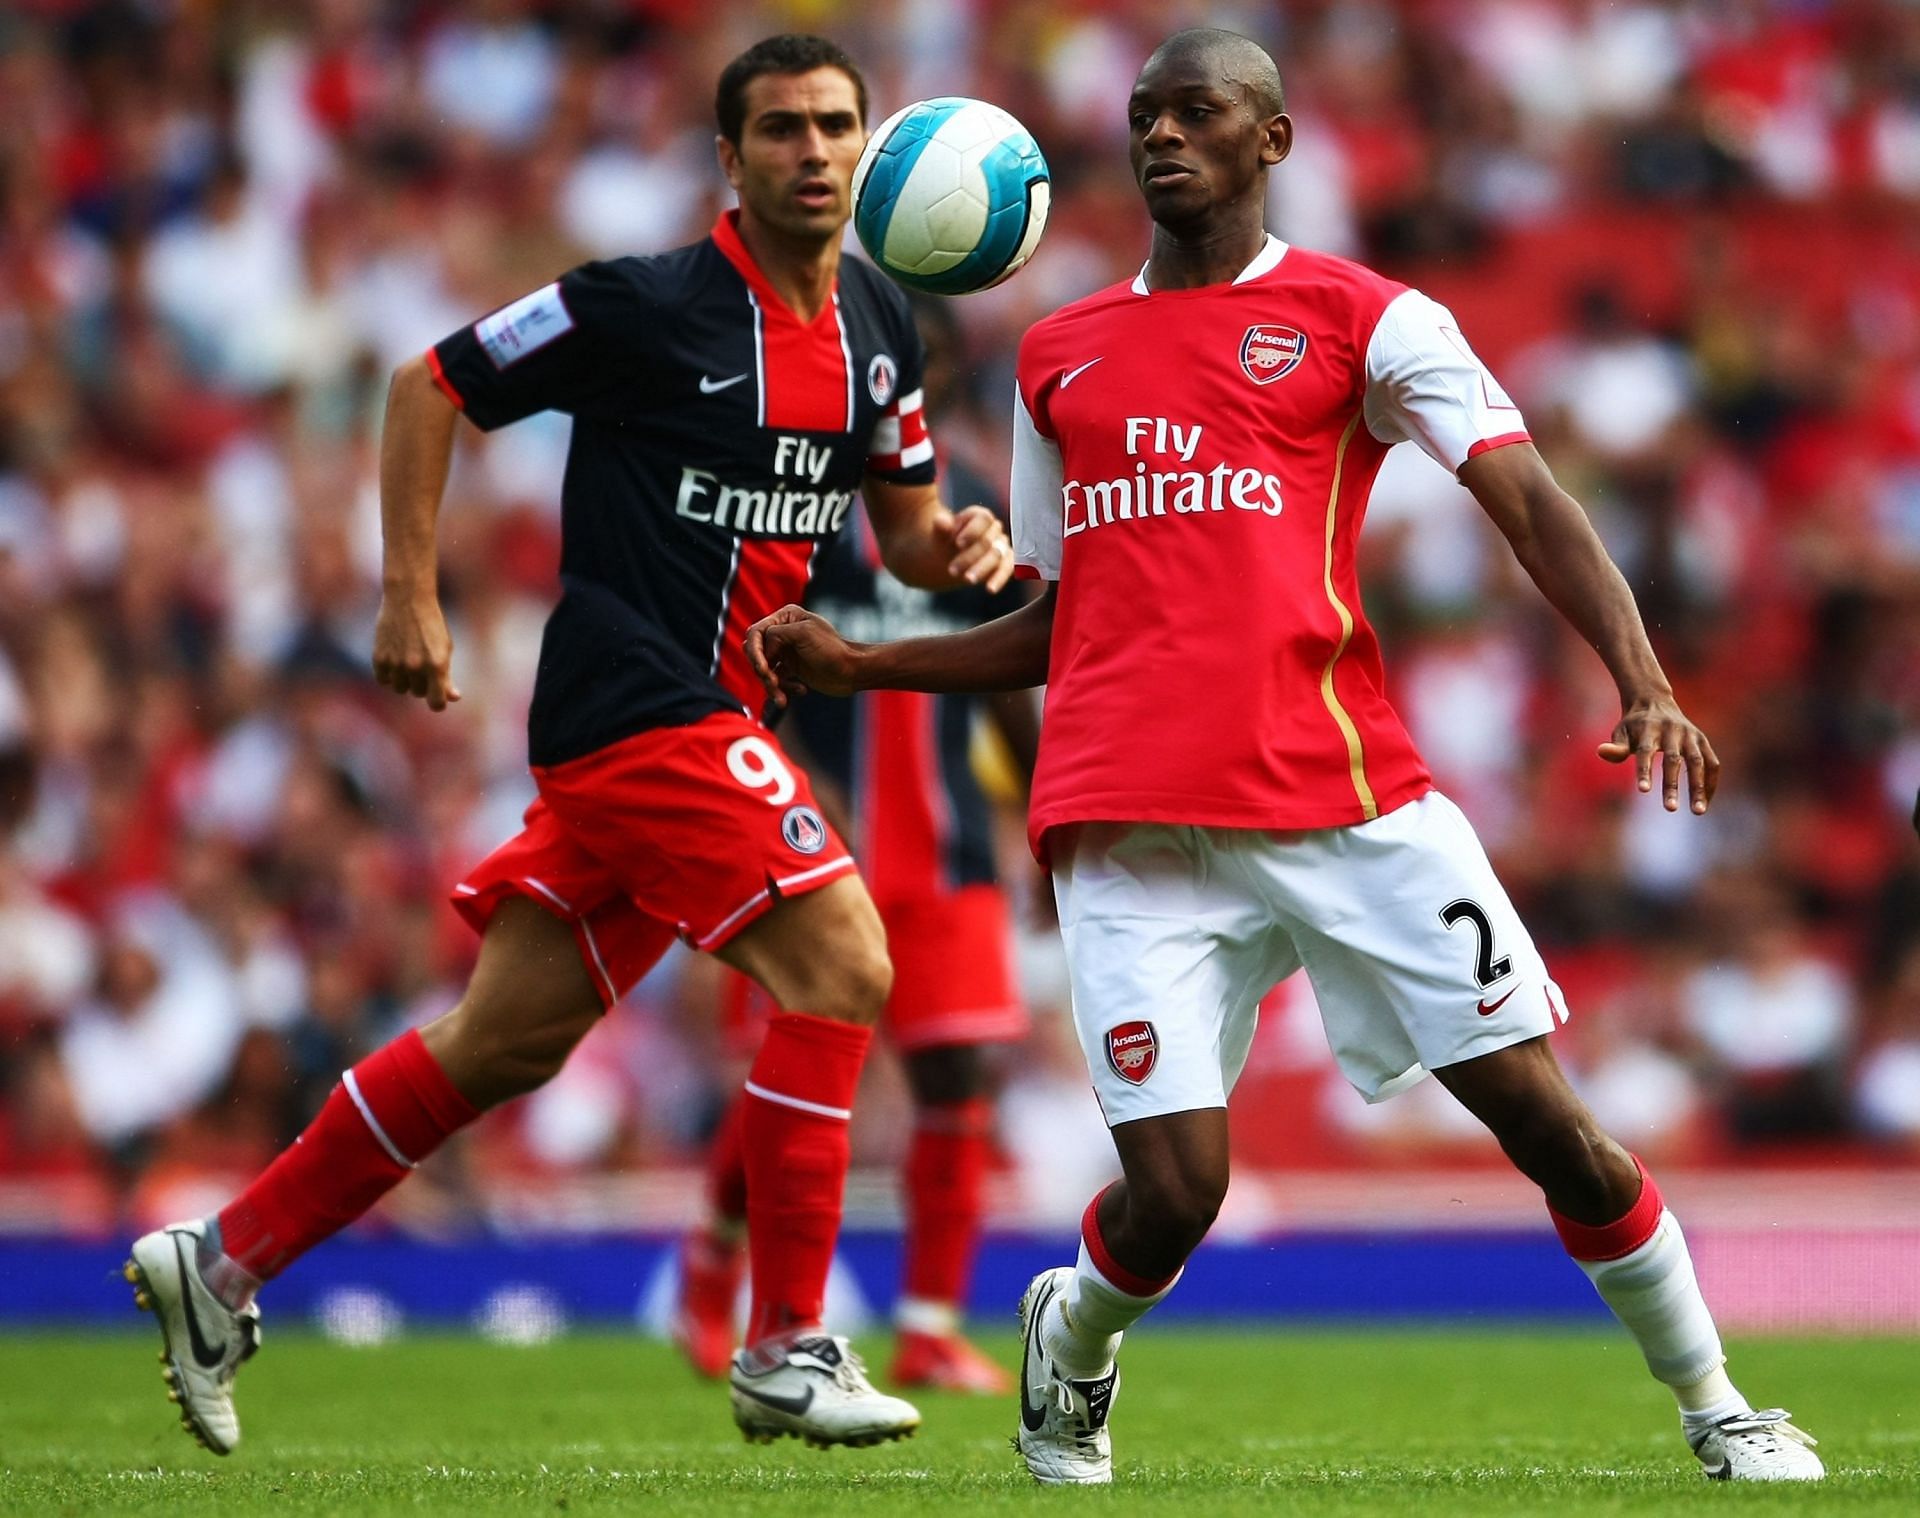 Arsenal v PSG - Emirates Cup